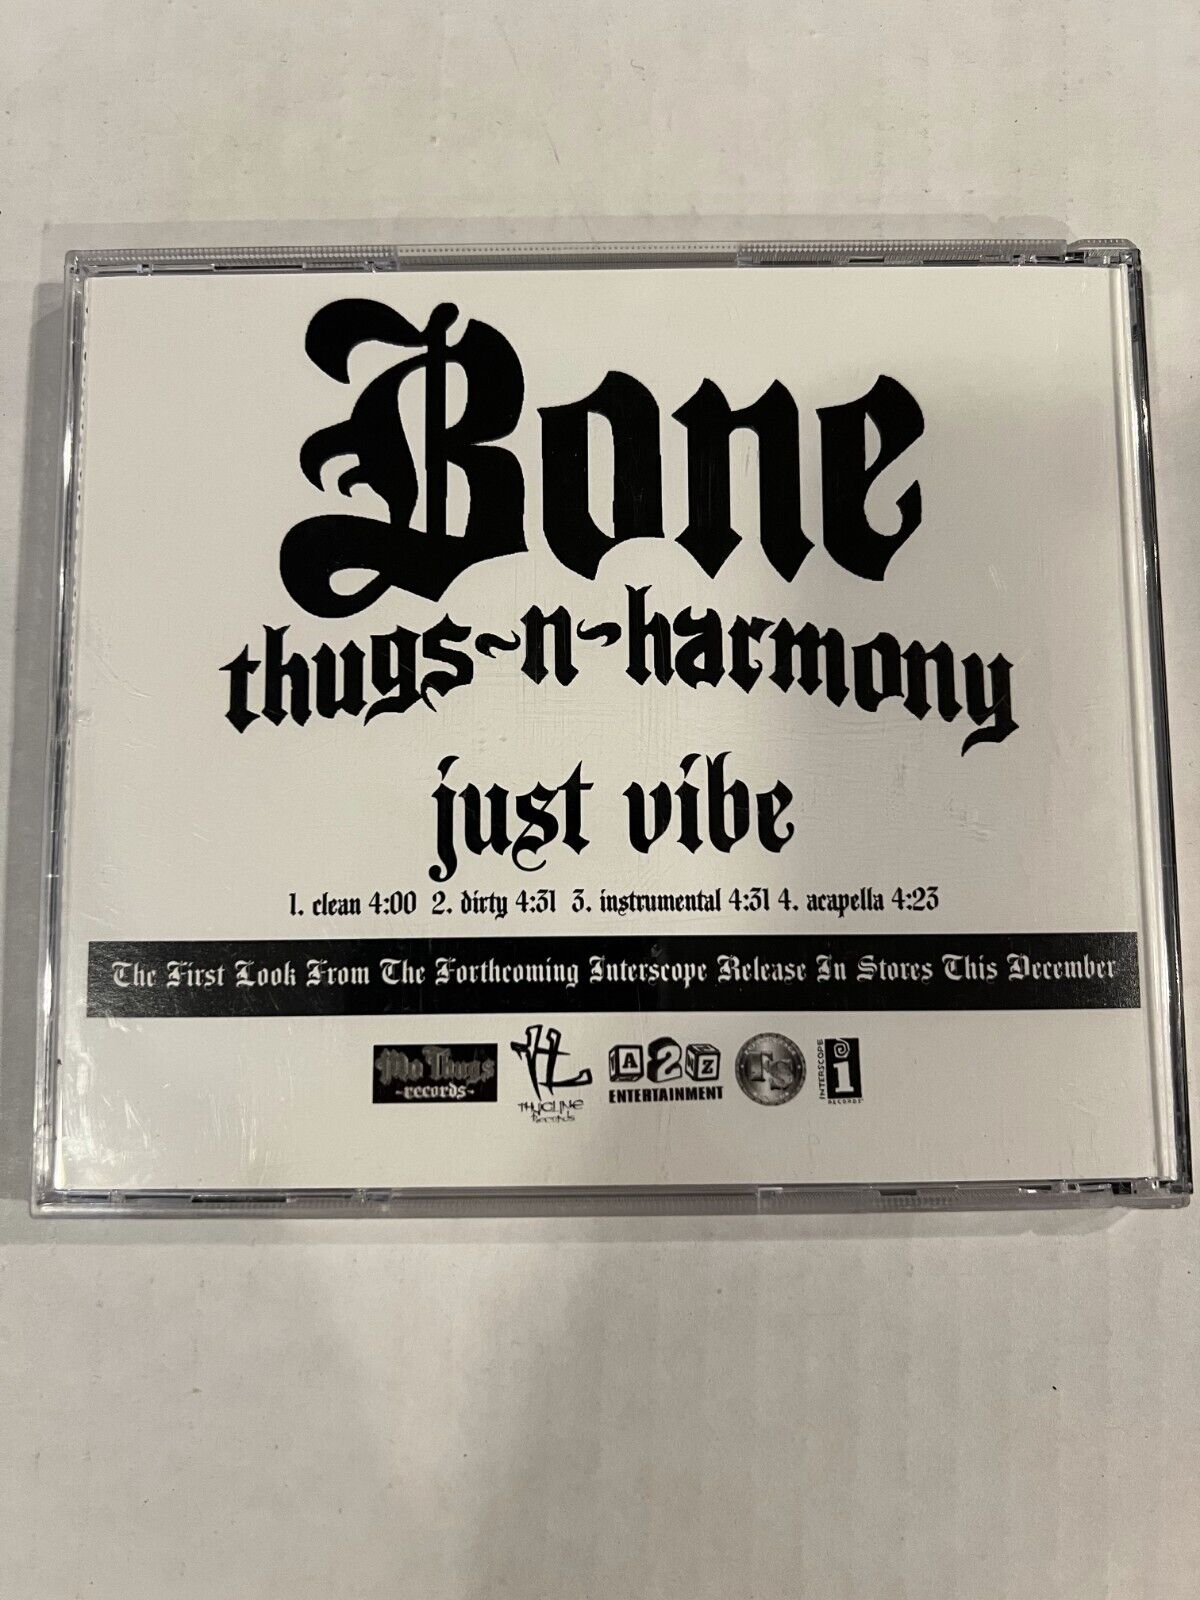 Bone Thugs-N-Harmony – Just Vibe Promo CD